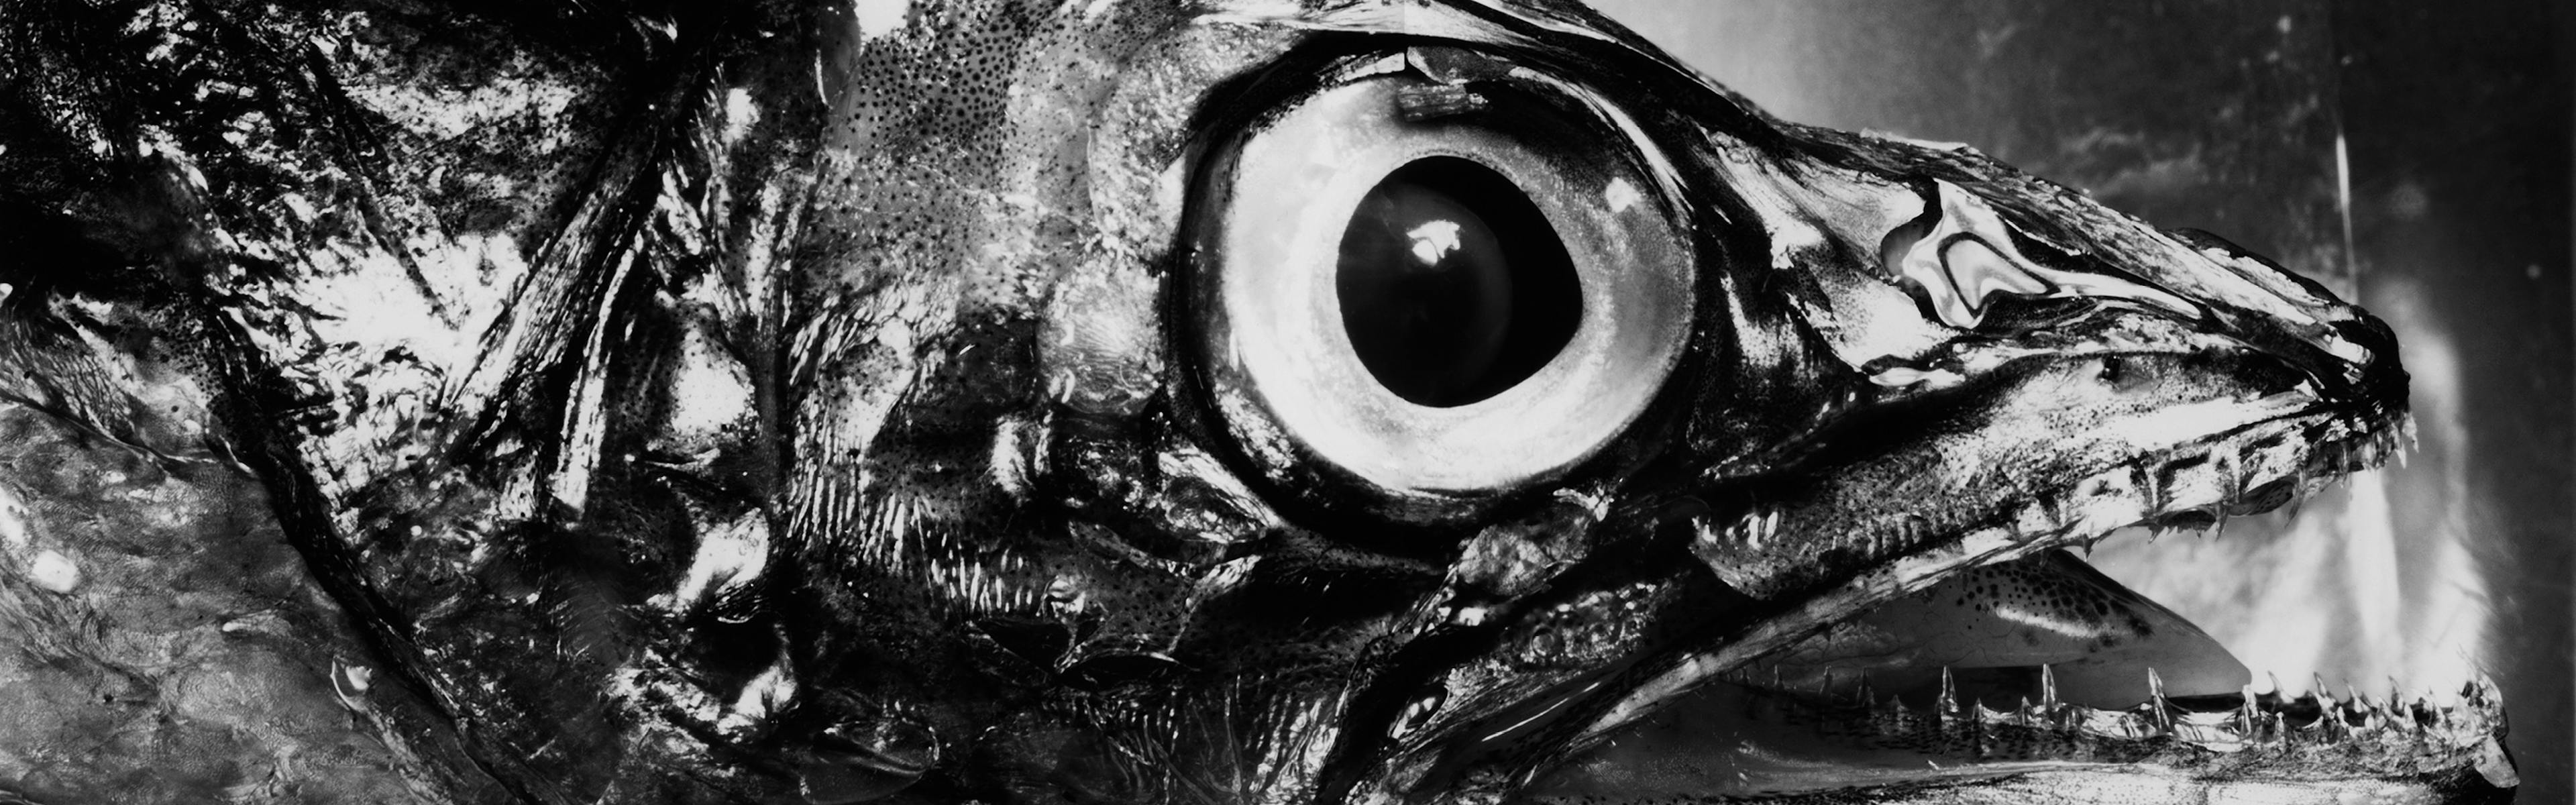 image of Fish Head photograpg